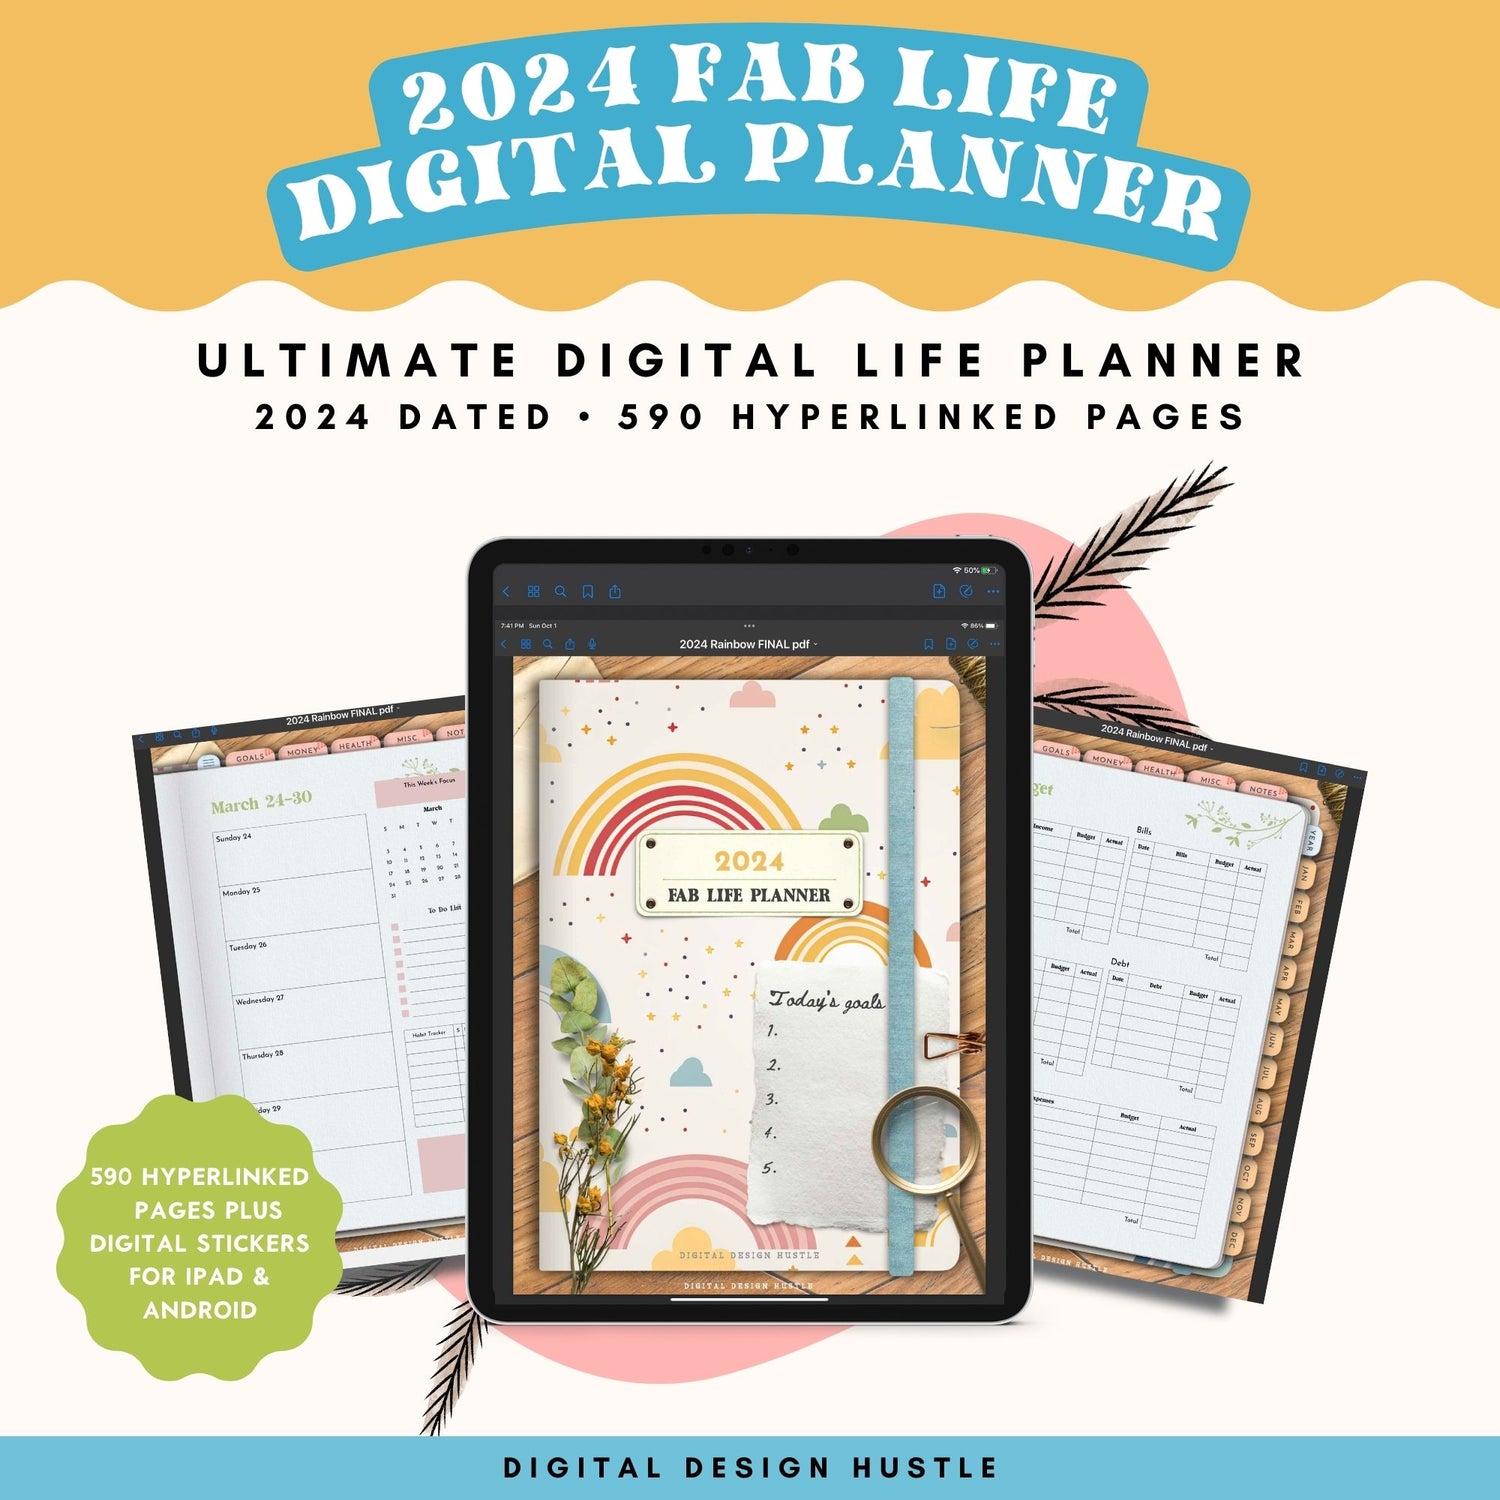 World of Wizards Digital Life Planner Bundle - Farm Girl Designs